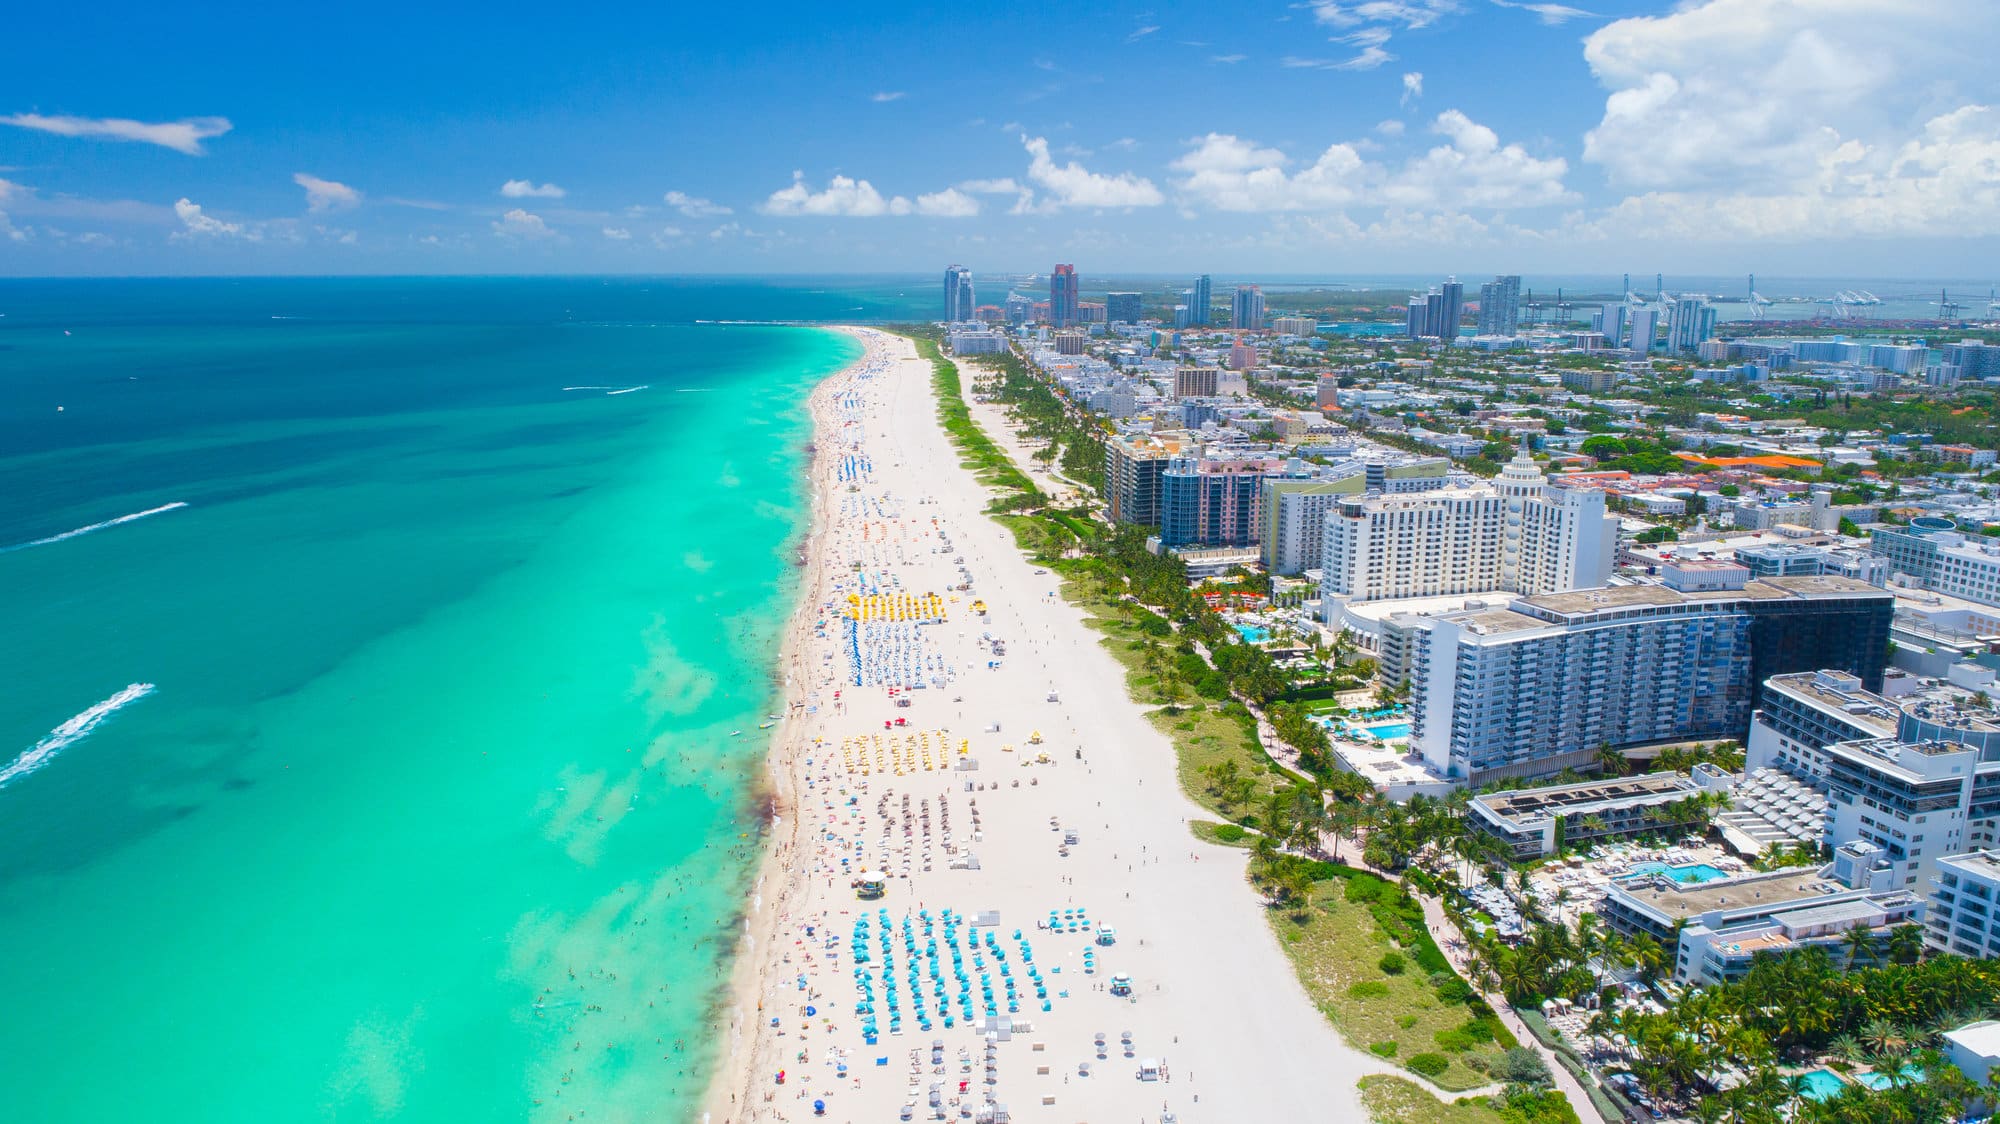 Top 12 Florida Beaches for Your Next Vacation | Beach.com